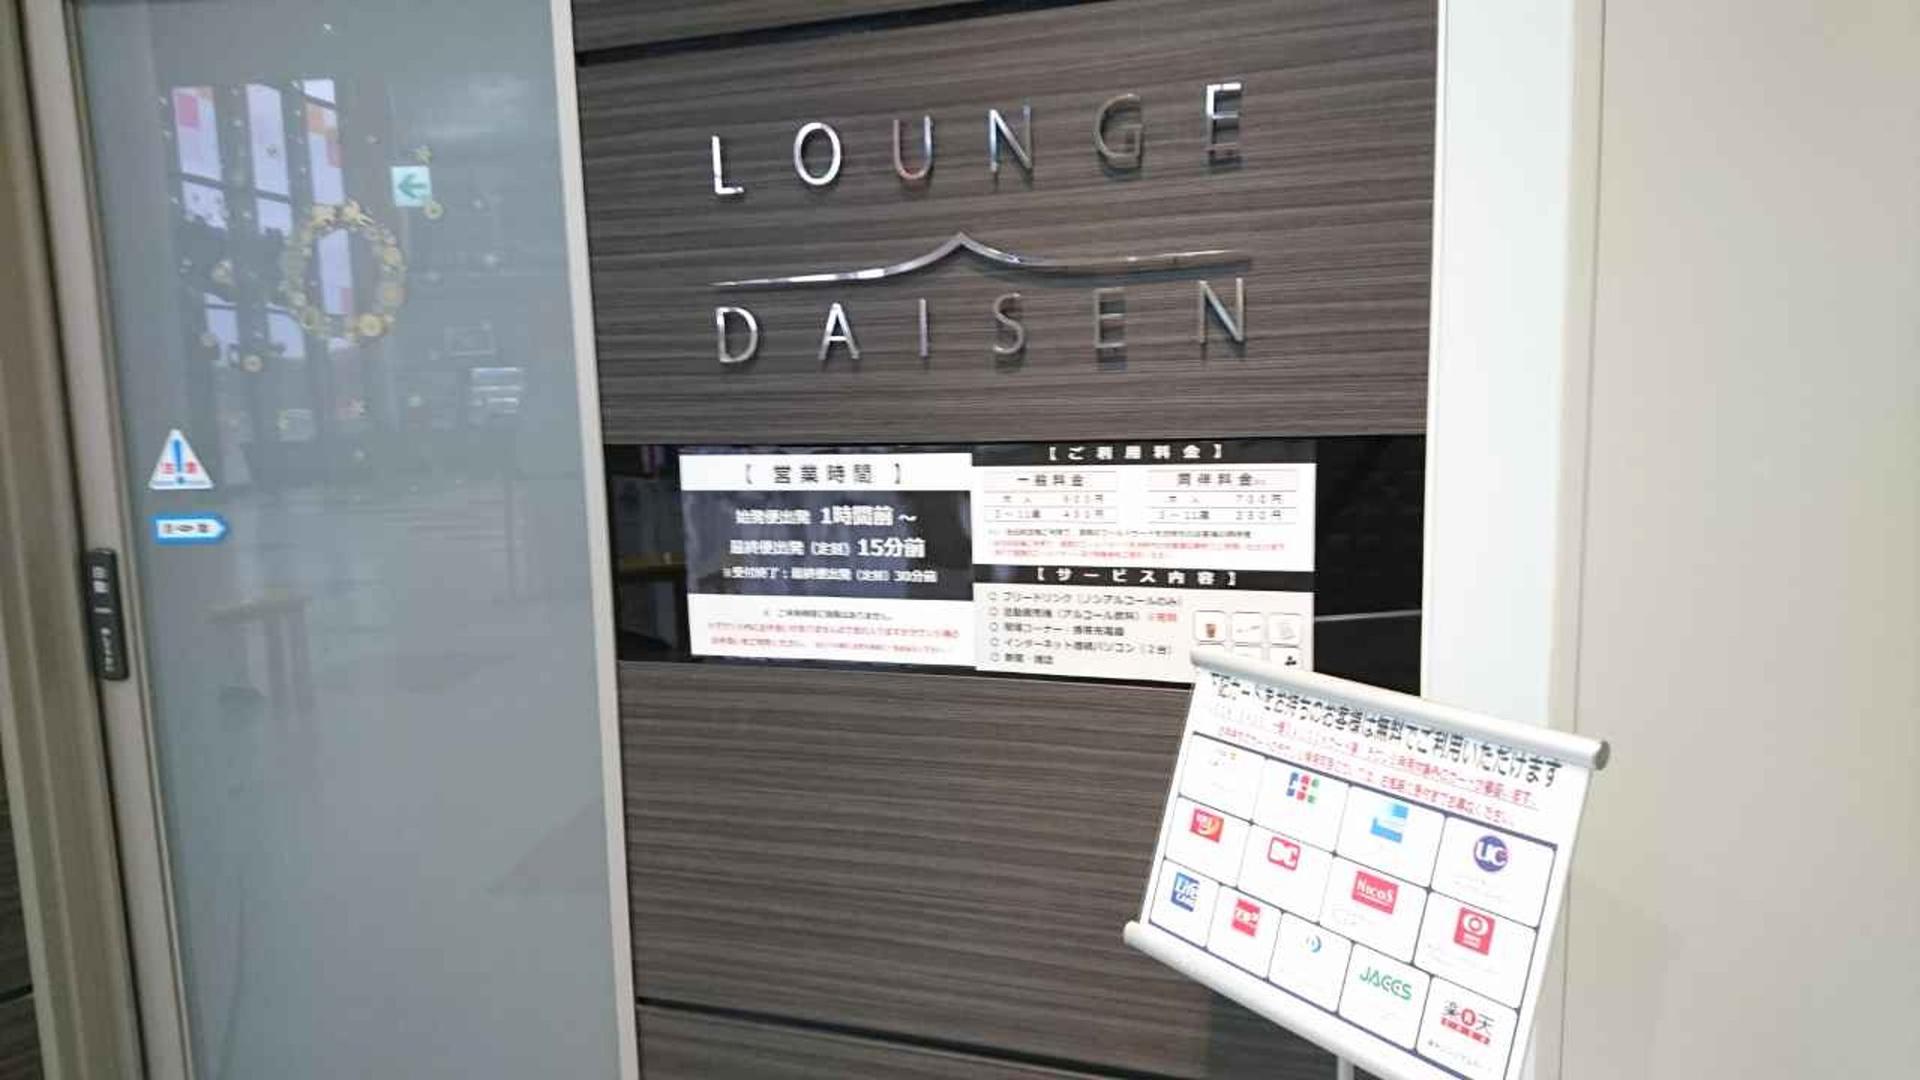 Lounge Daisen image 6 of 8